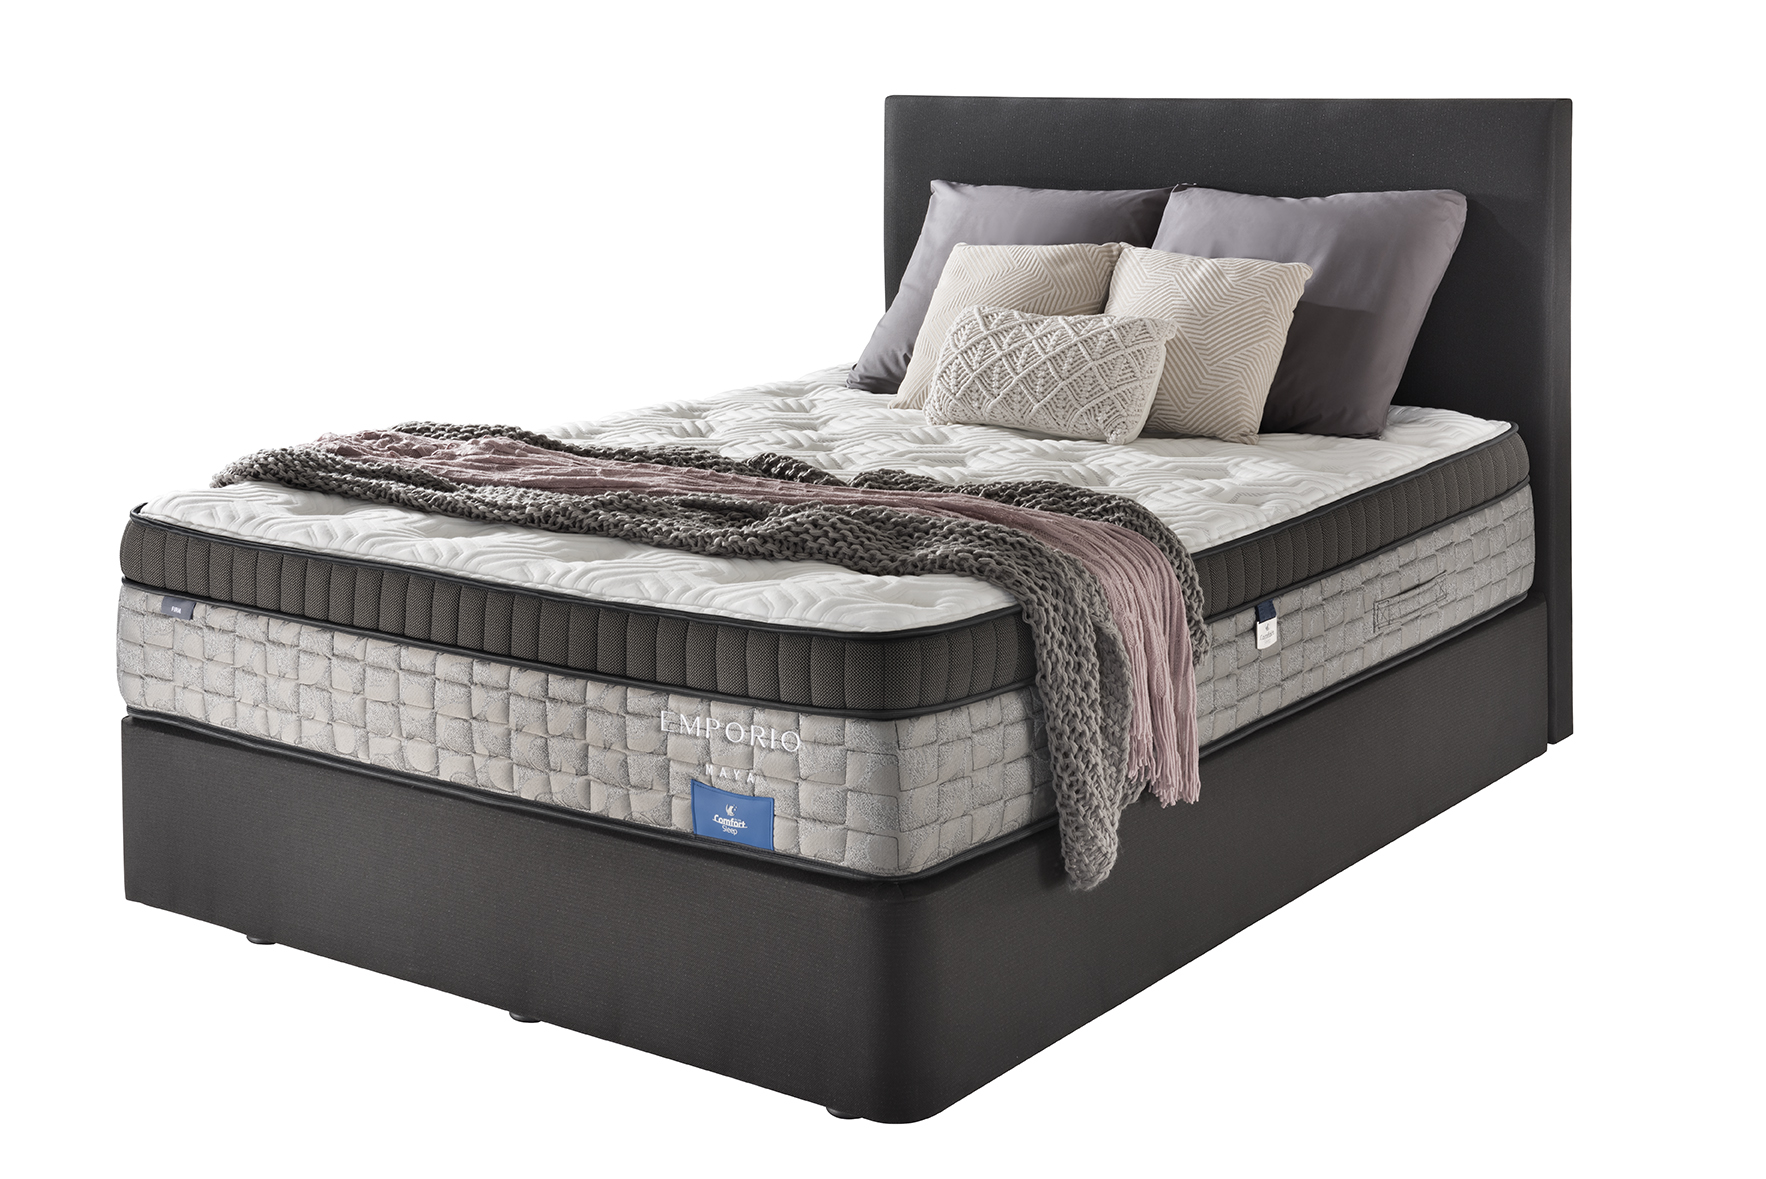 comfort sleep bedding mattress